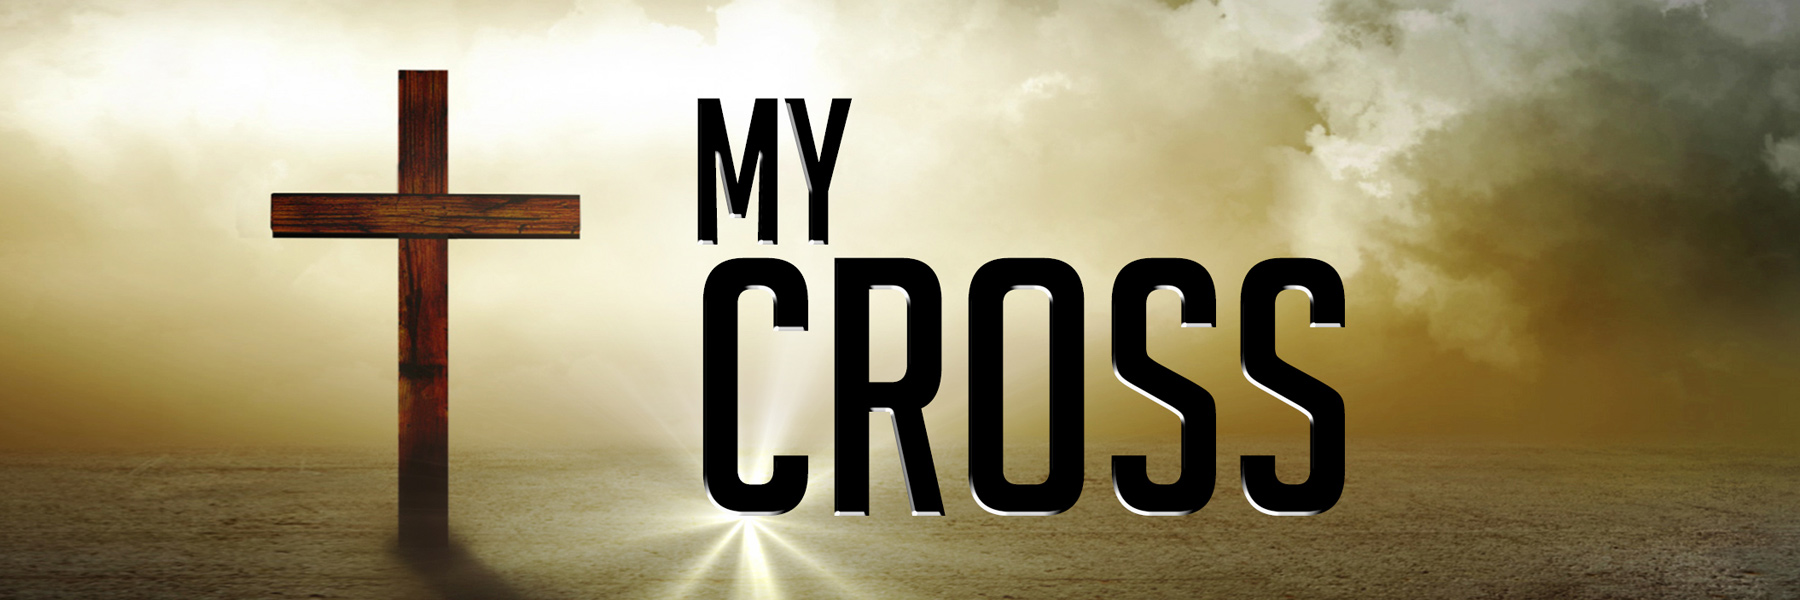 My Cross